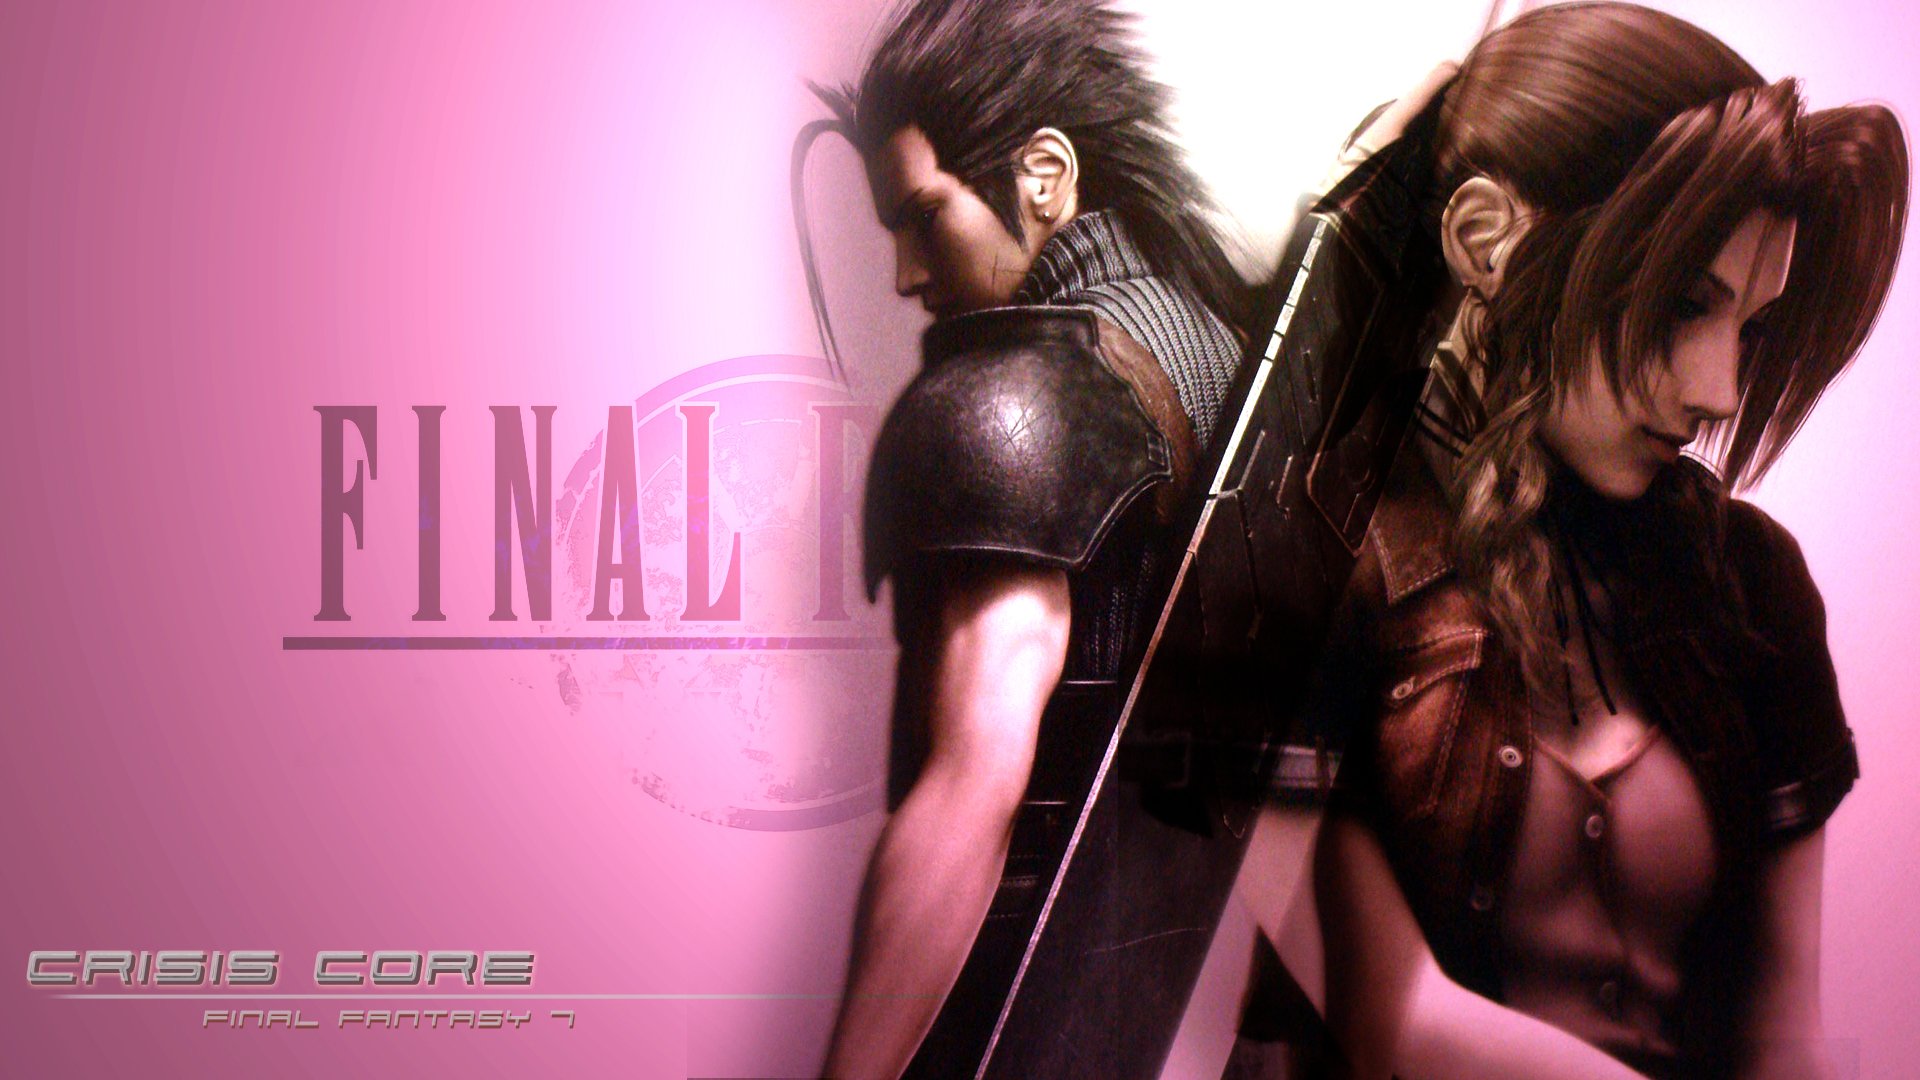 Crisis Core Final Fantasy Vii Hd Wallpaper Background Image 